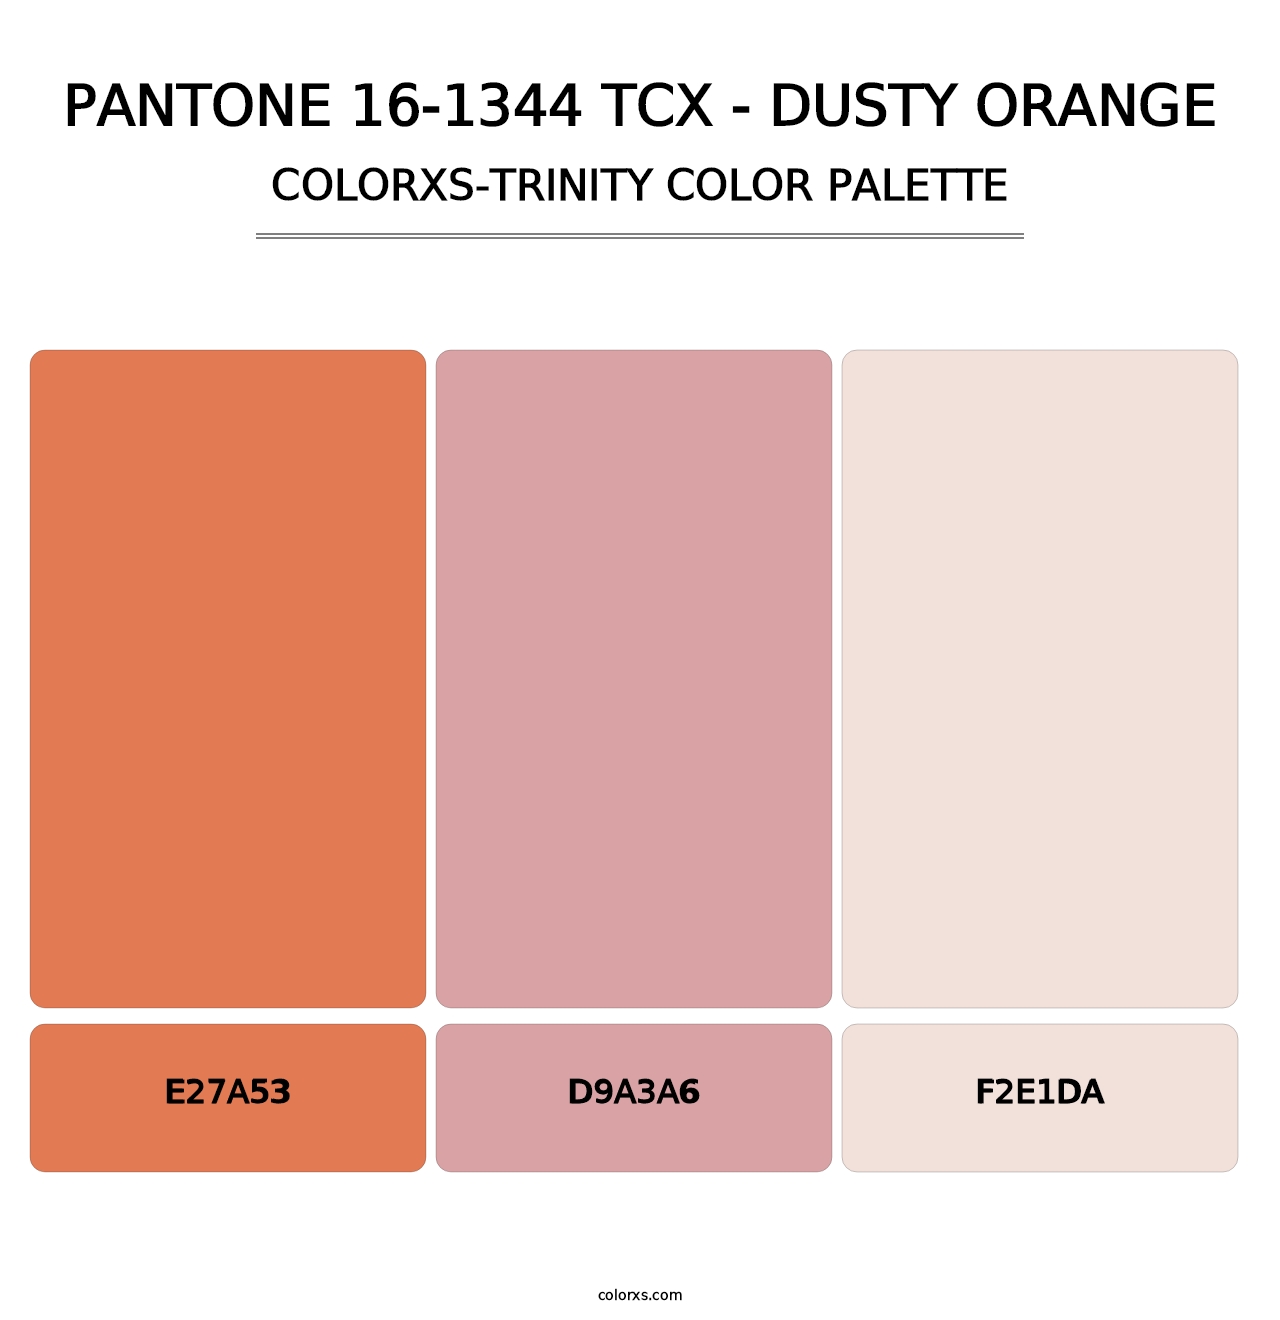 PANTONE 16-1344 TCX - Dusty Orange - Colorxs Trinity Palette